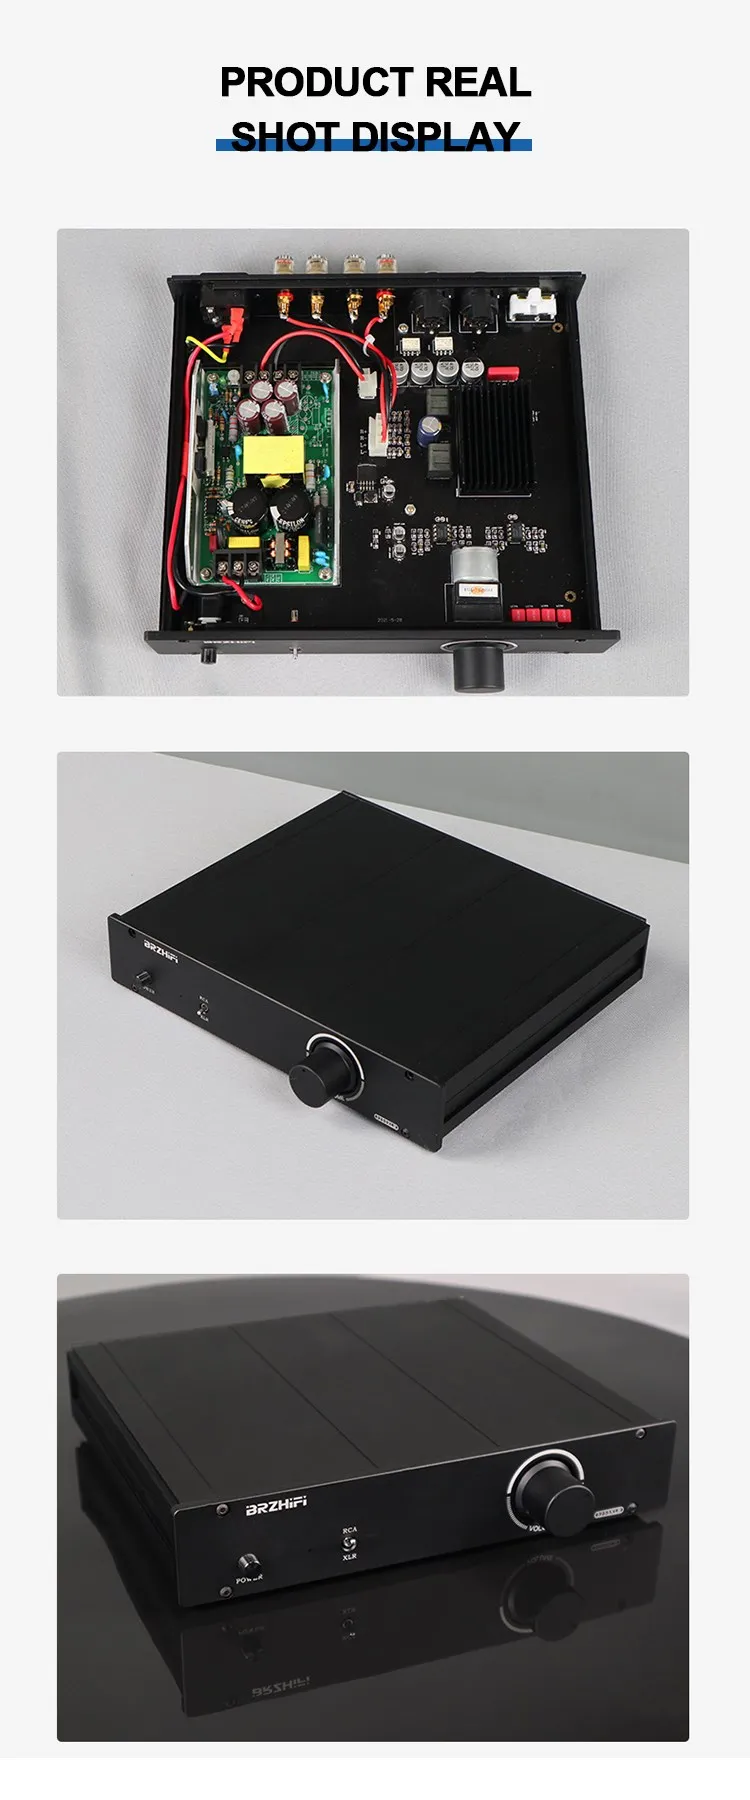 BRZHIFI Audio TPA3255 XLR Sound Amplifier Fully Balanced Input and Output 300W*2 Audiophile Digital Amplifier HiFi Stereo Amp